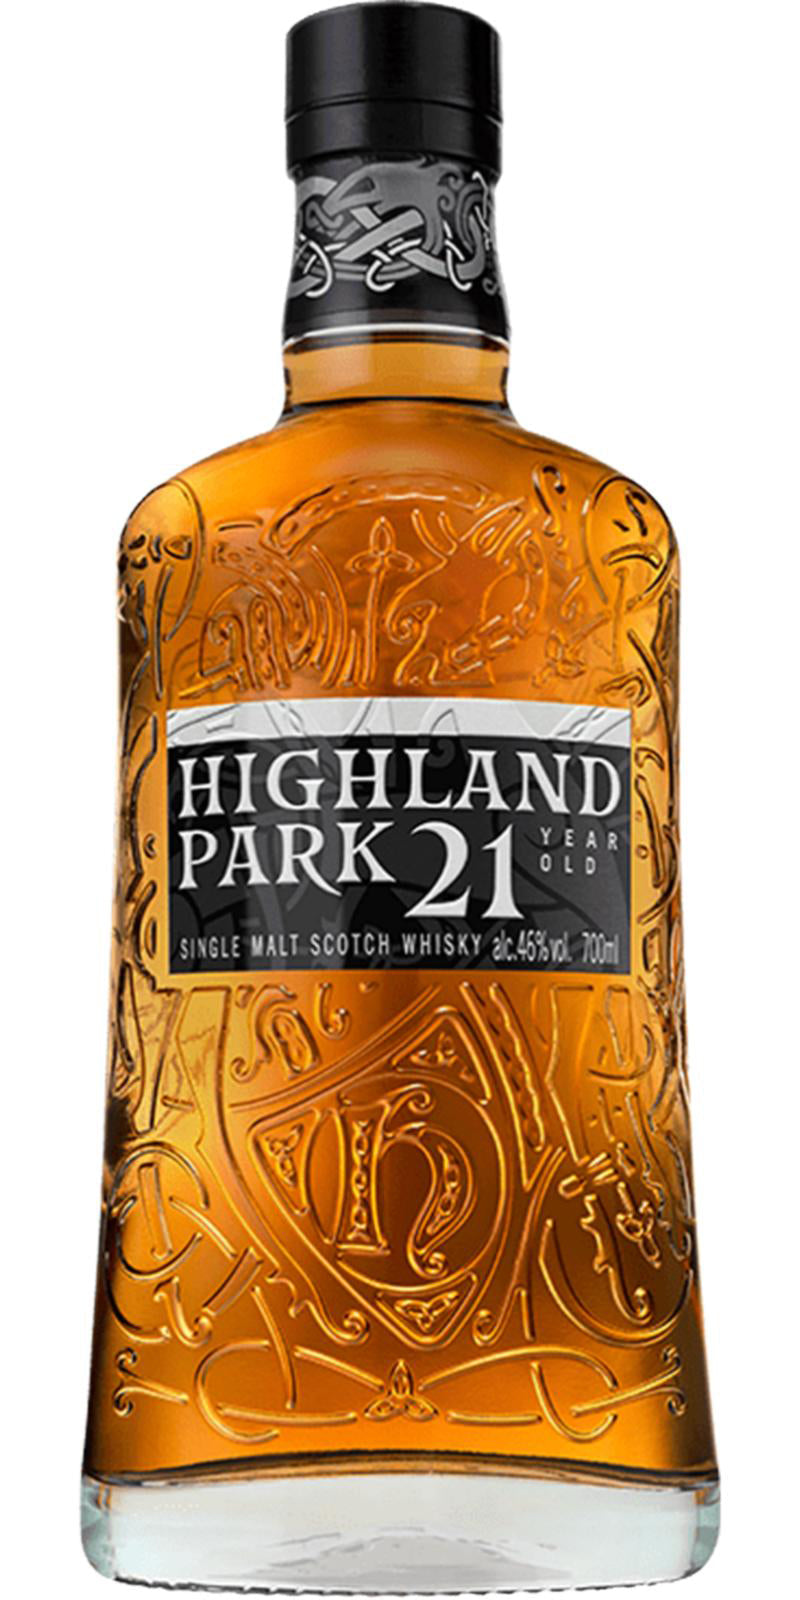 Highland Park 21 Year